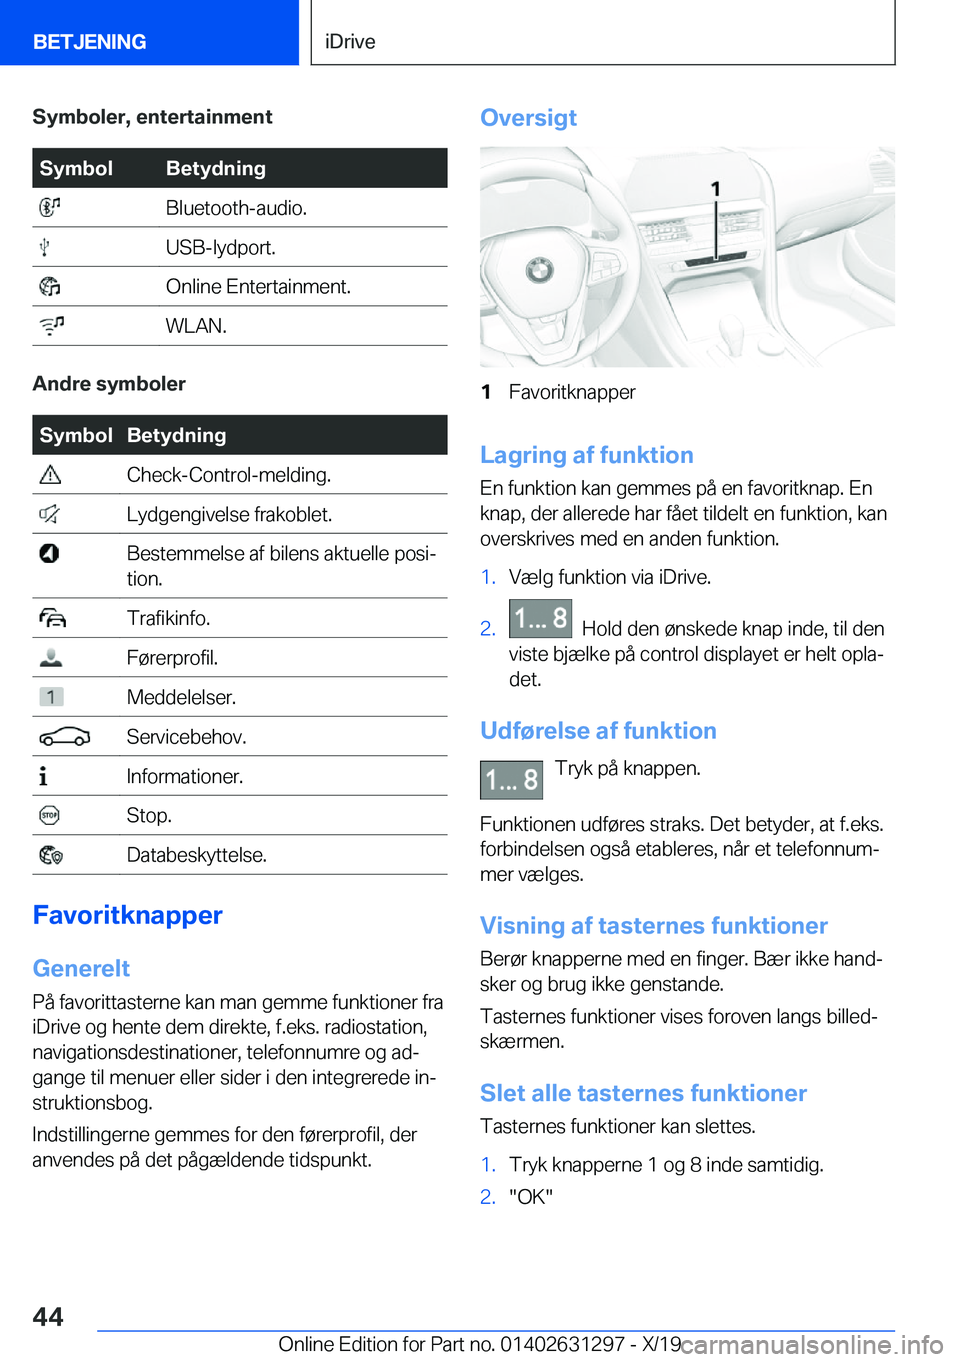 BMW M8 2020  InstruktionsbØger (in Danish) �S�y�m�b�o�l�e�r�,��e�n�t�e�r�t�a�i�n�m�e�n�t�S�y�m�b�o�l�B�e�t�y�d�n�i�n�g��B�l�u�e�t�o�o�t�h�-�a�u�d�i�o�.��U�S�B�-�l�y�d�p�o�r�t�.��O�n�l�i�n�e��E�n�t�e�r�t�a�i�n�m�e�n�t�.��W�L�A�N�.
�A�n�d�